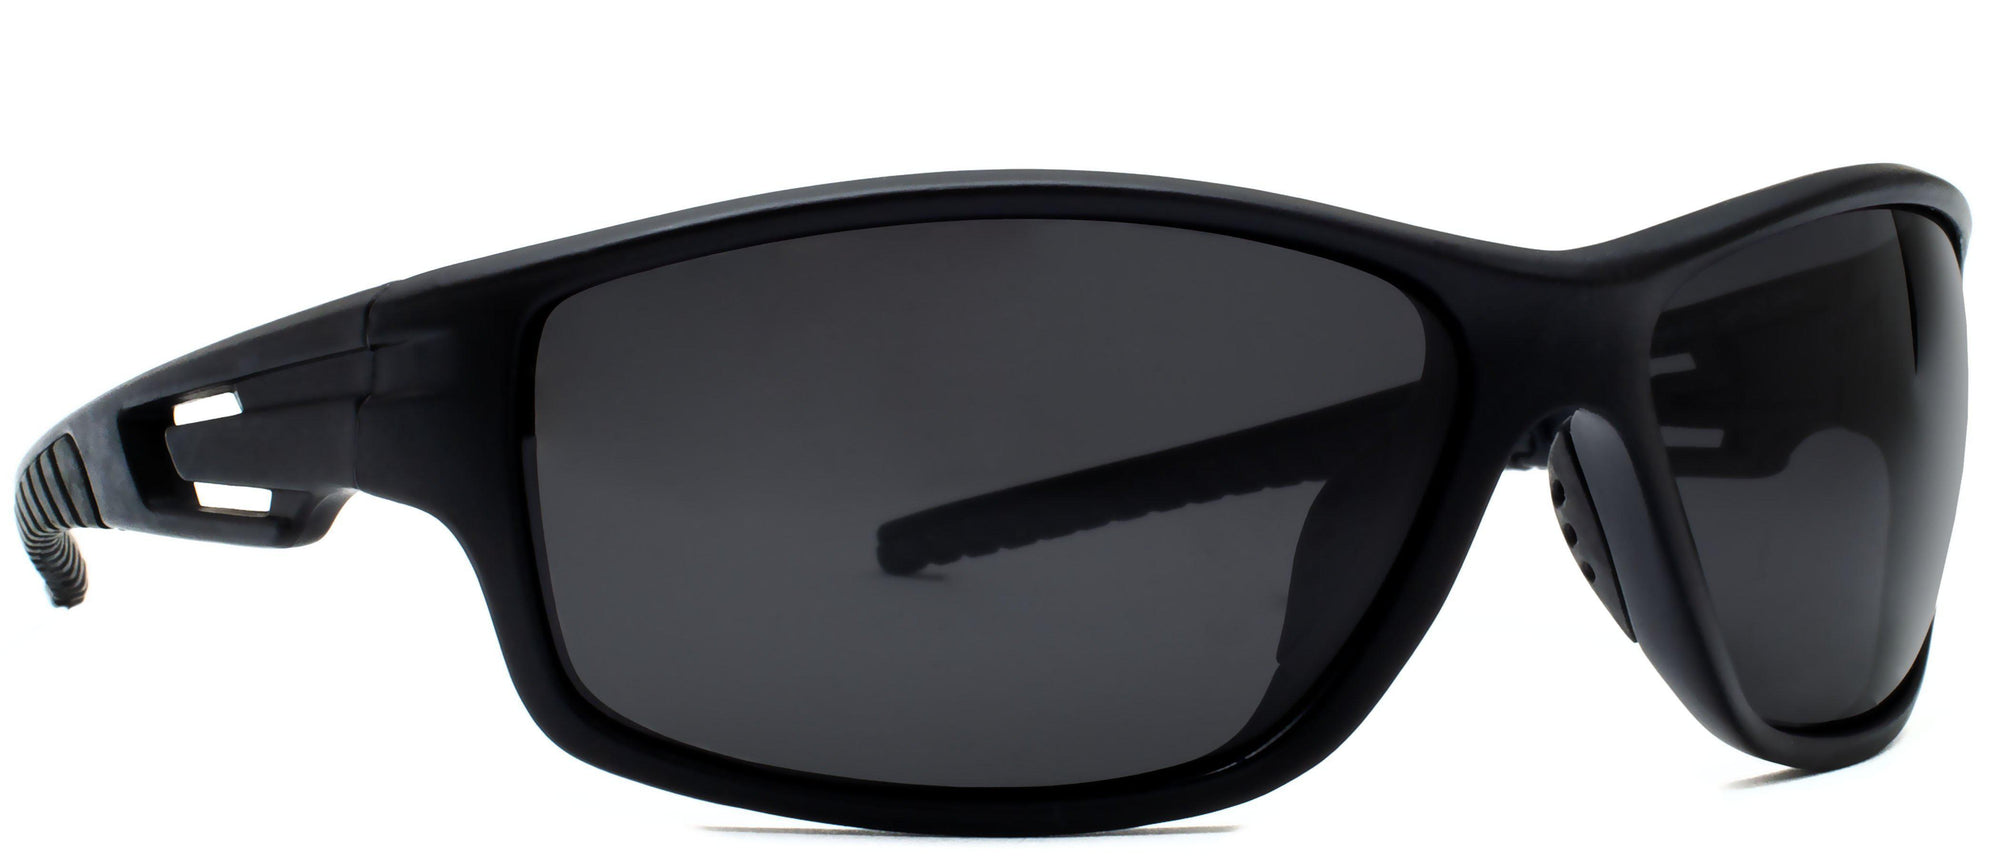 Granite Street - Sunglasses NYS Collection Eyewear Black/Black